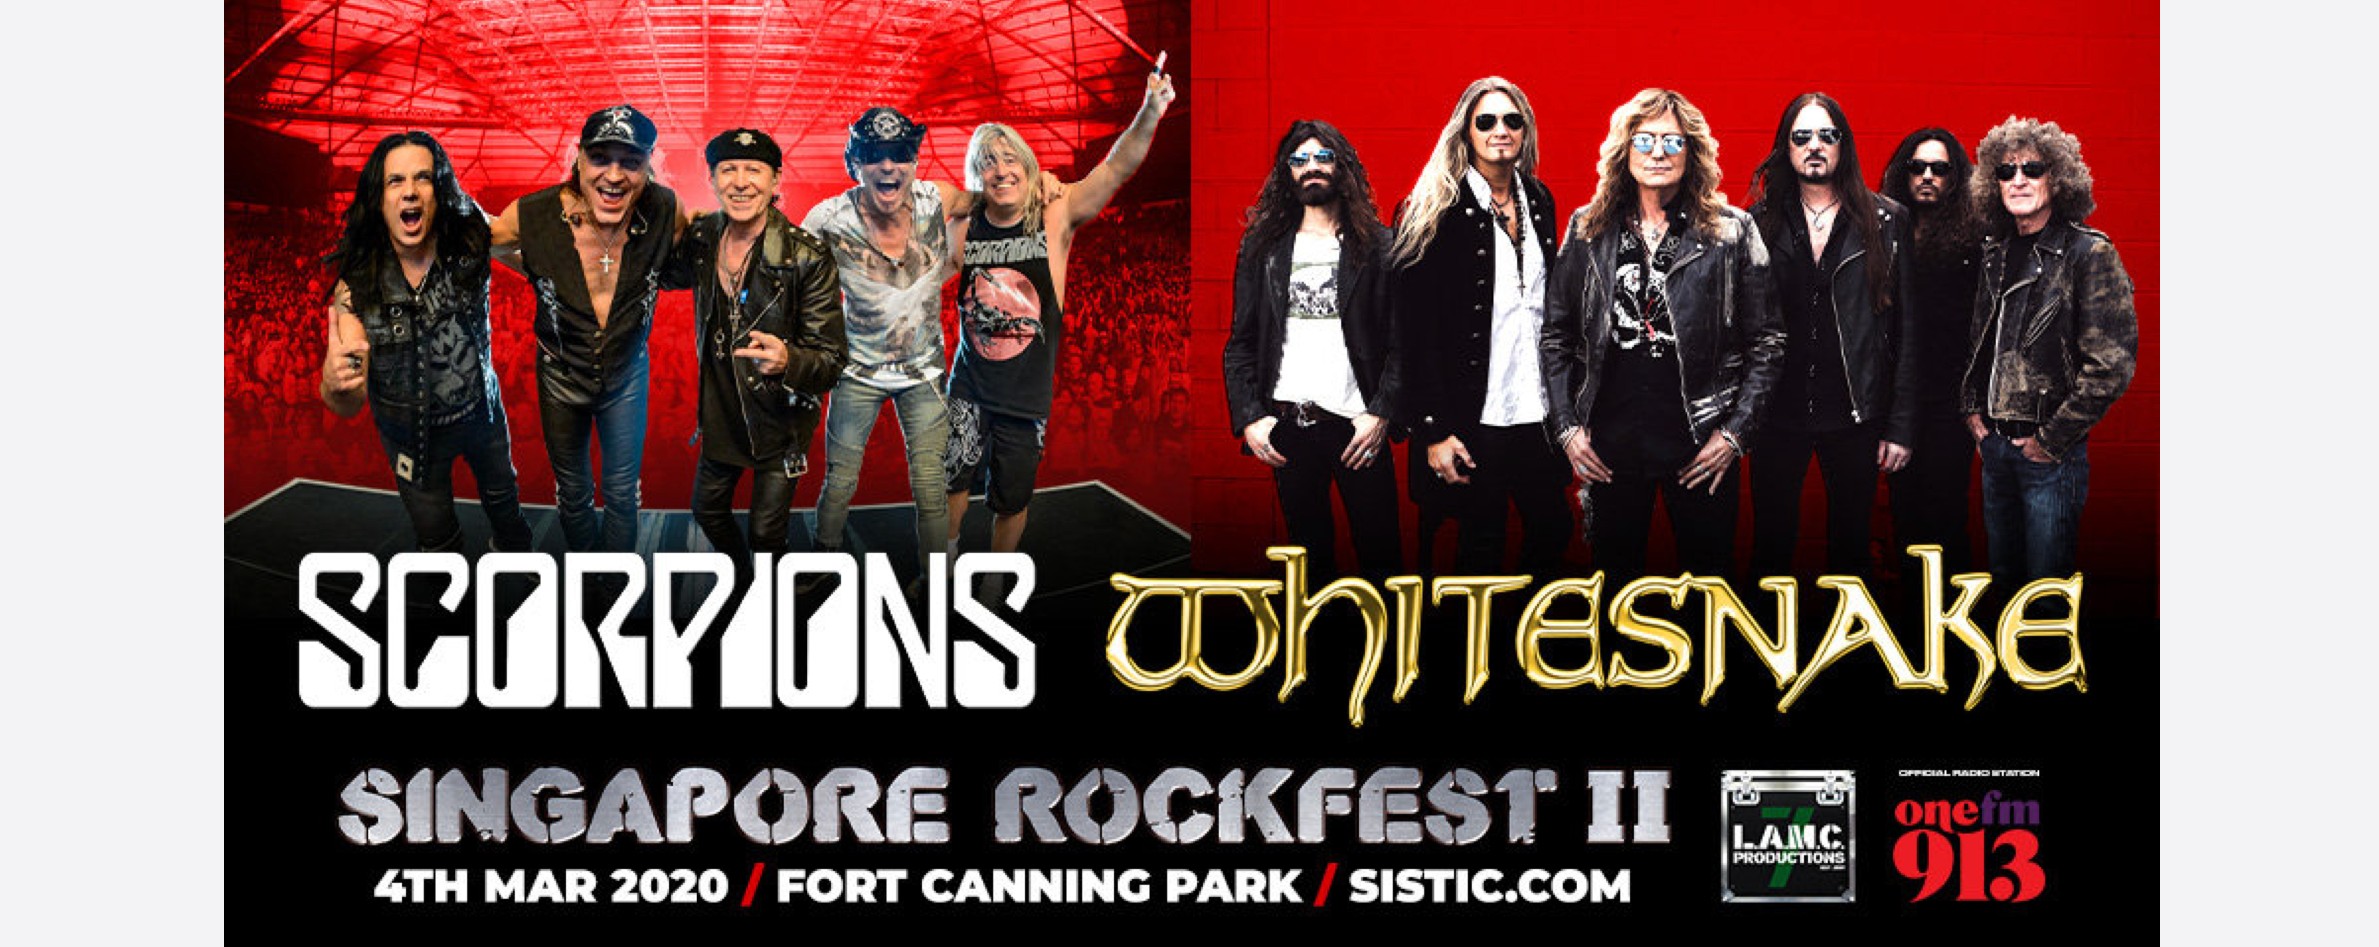 Singapore Rockfest II: Scorpions and Whitesnake